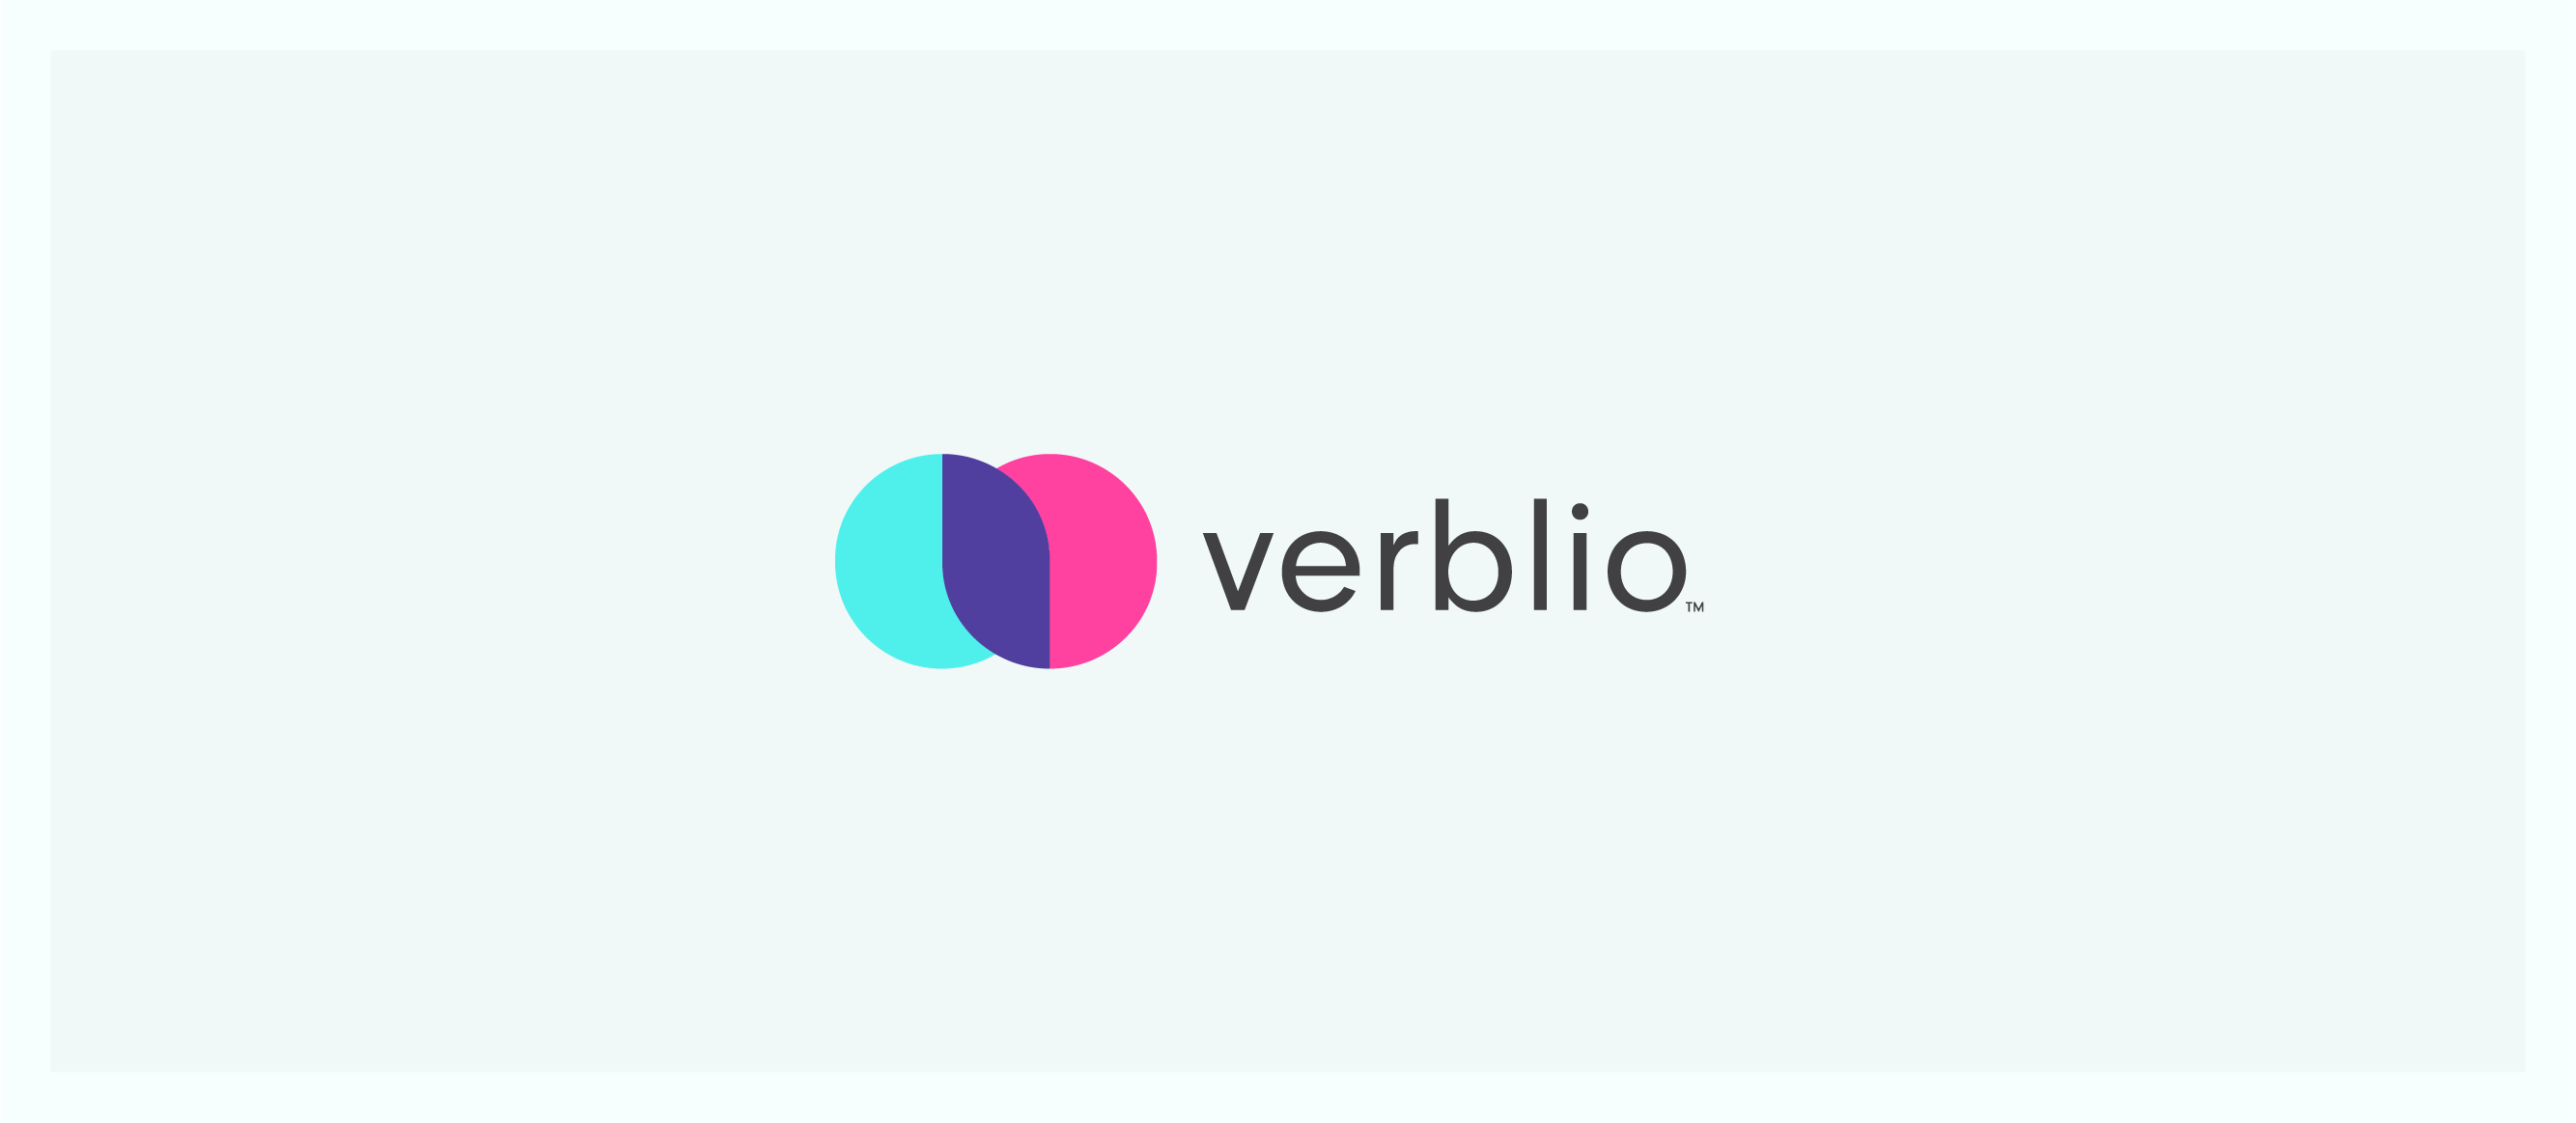 verblio-Logo-Naming-Trademark-Design